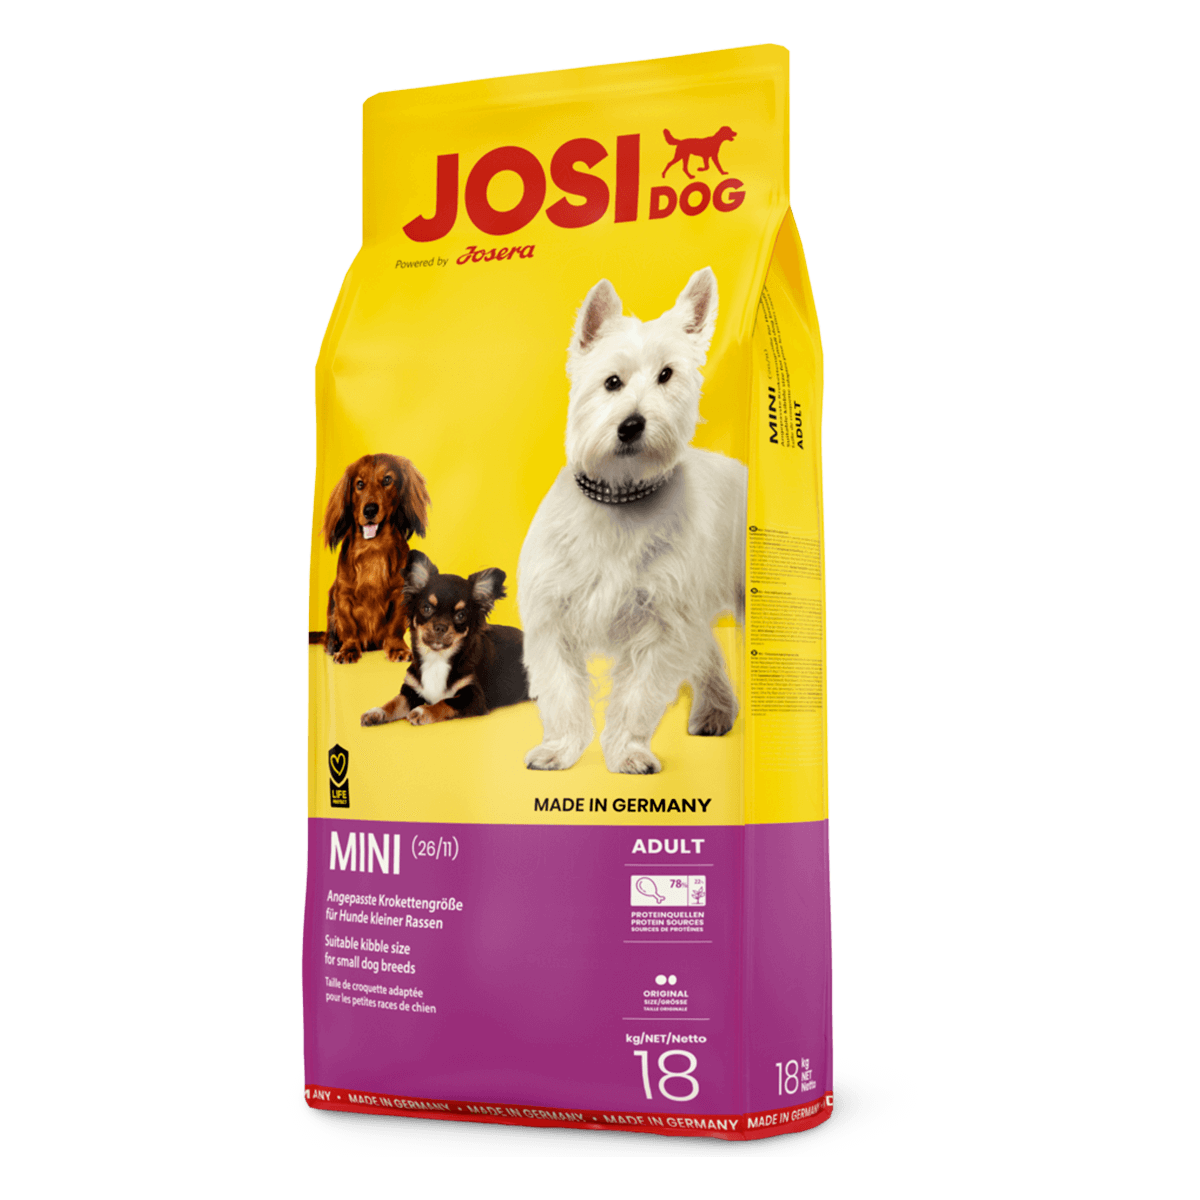 Josera JosiDog Mini 26/11, 18 кг - корм Йозера для собак малых пород